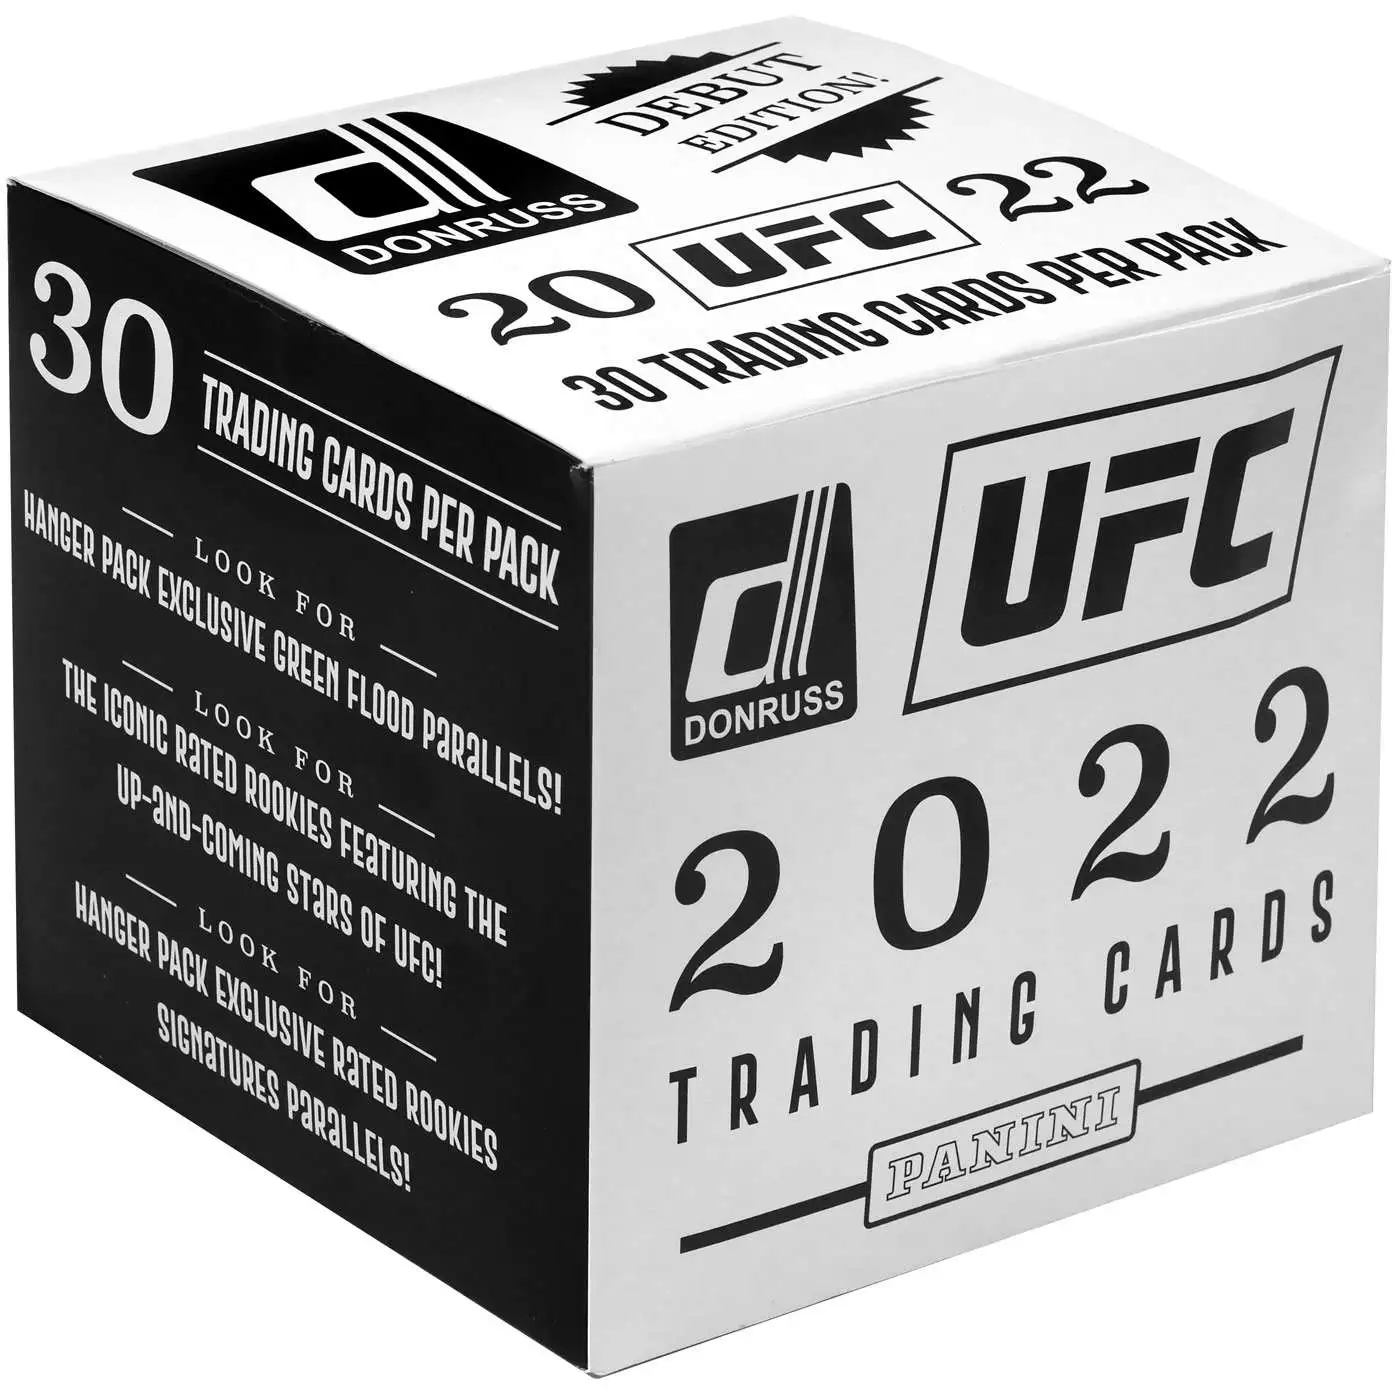 2021 Panini Donruss NFL Football HANGER box (50 cards/bx)